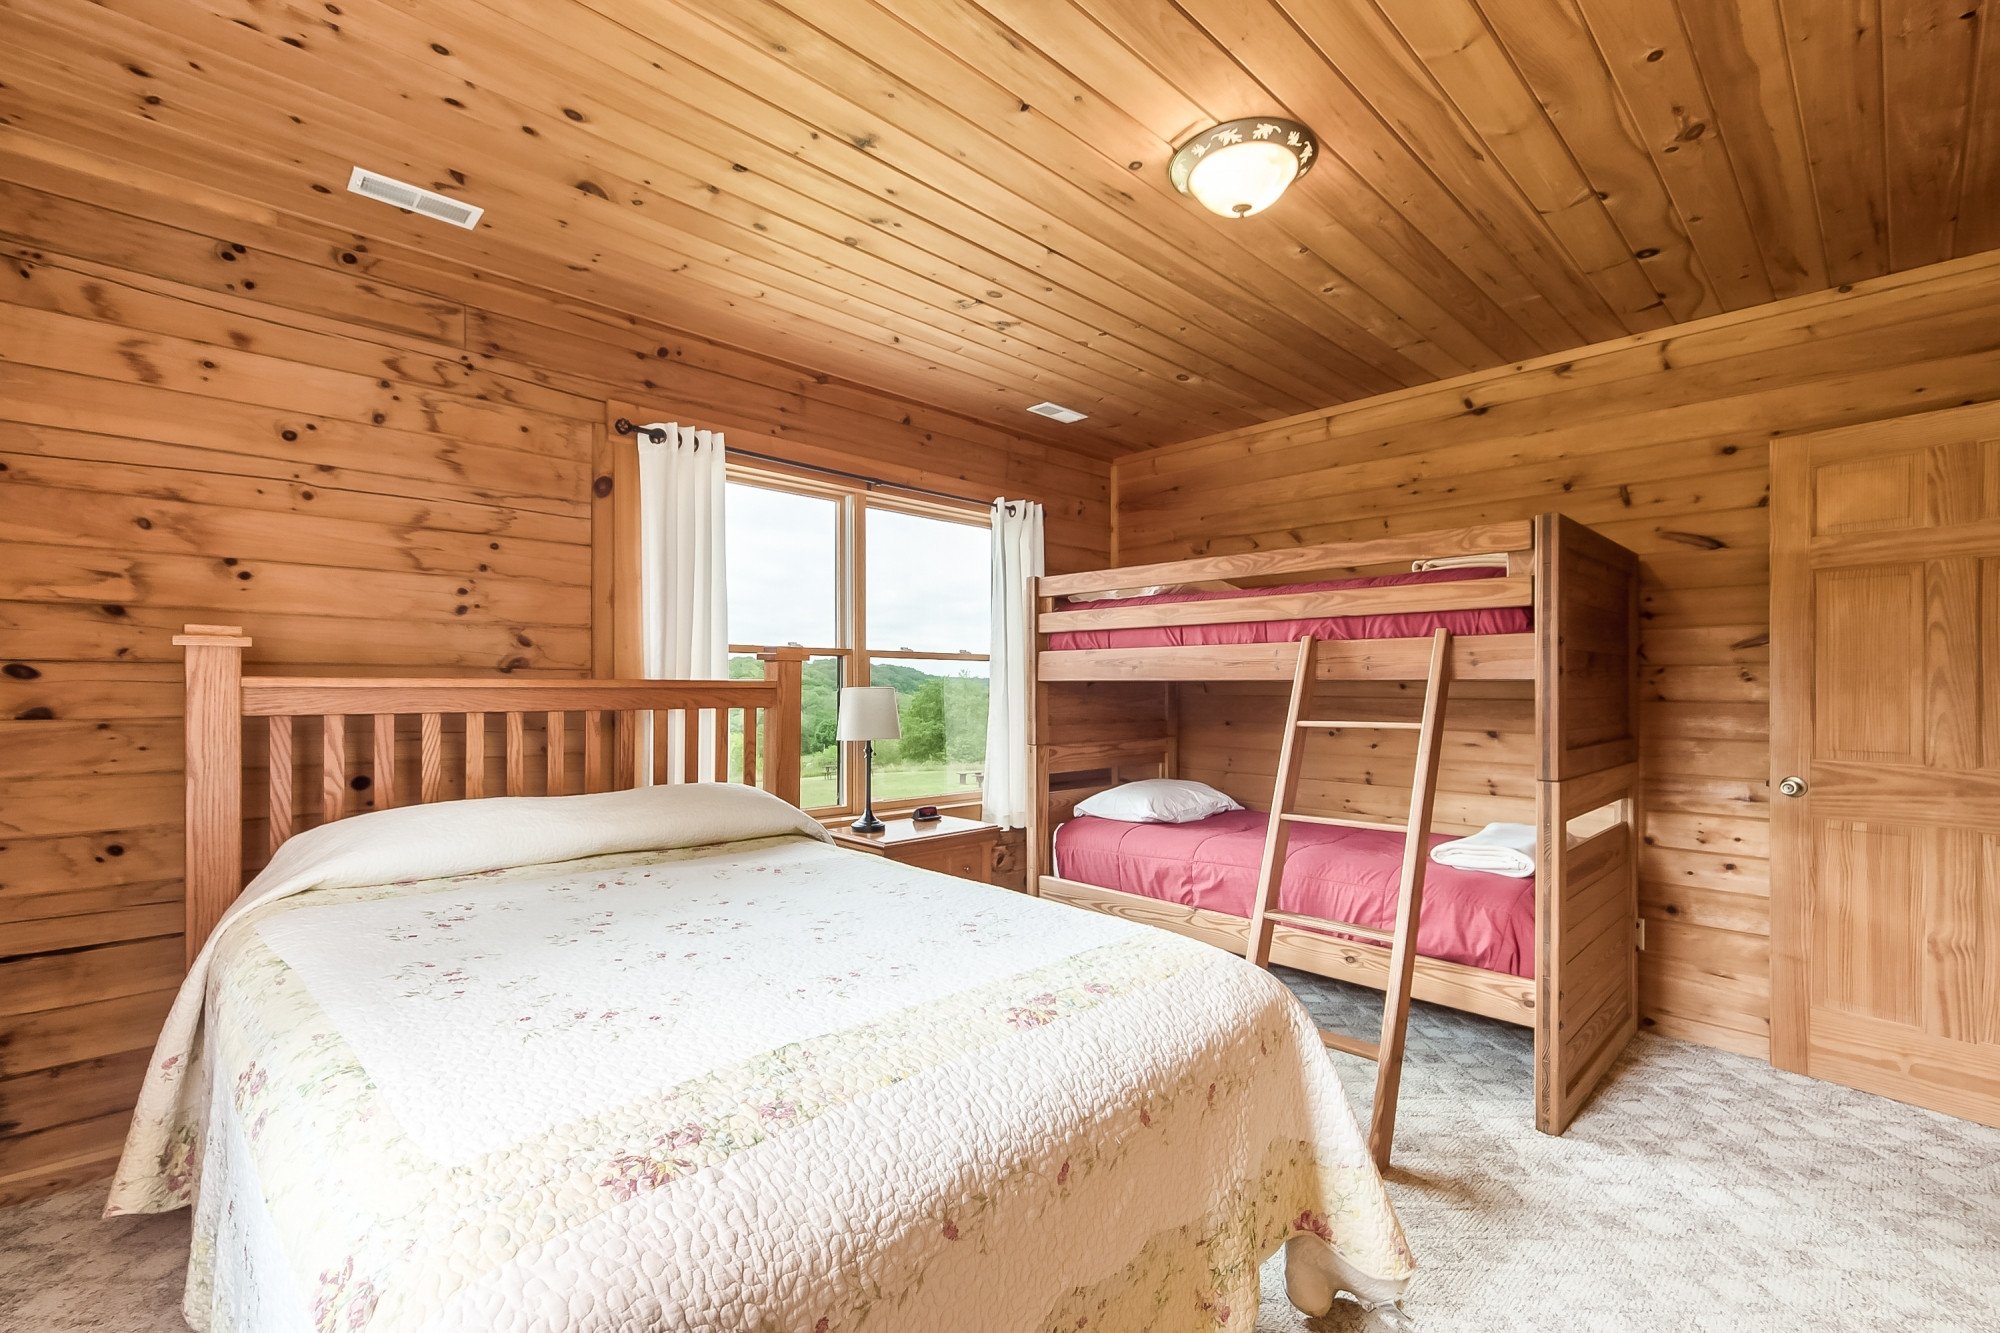 Cedar Log Bedroom Furniture Best Of Cedar Hill Up to 30 Guests